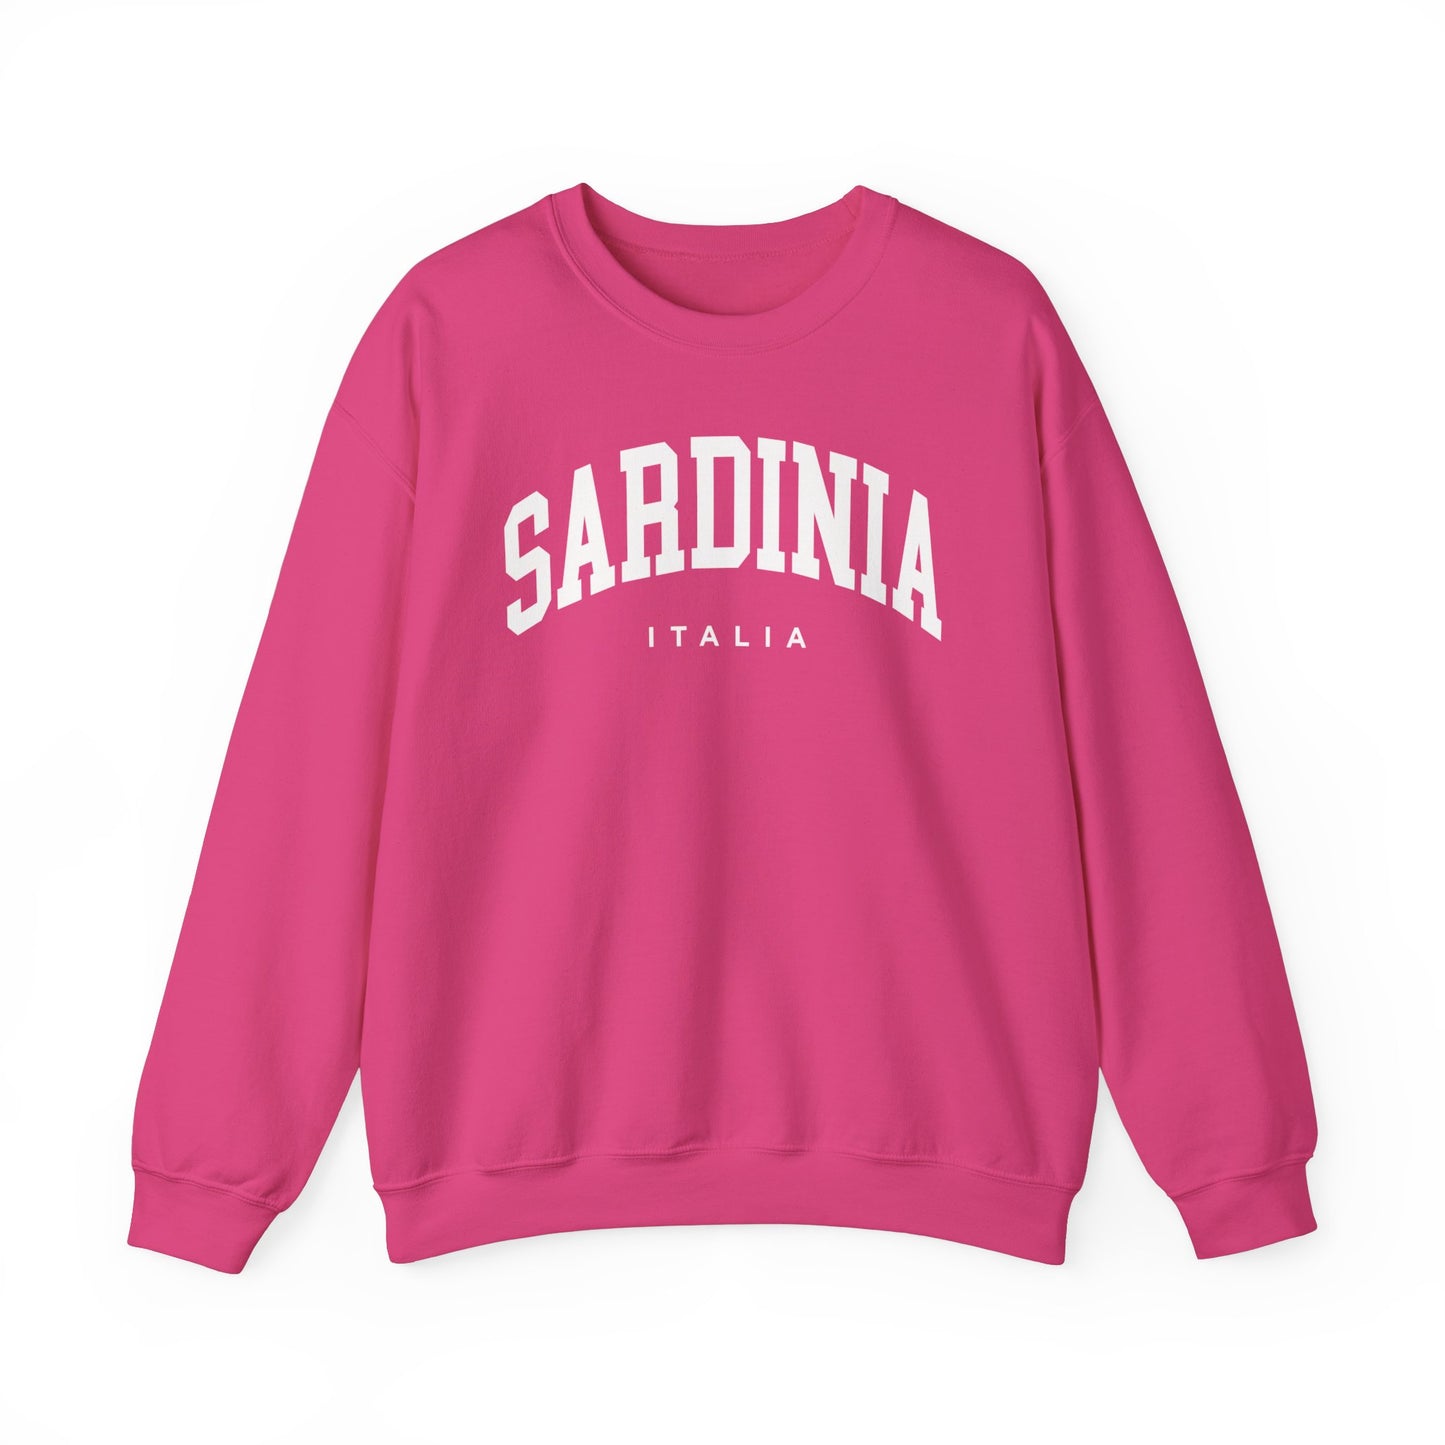 Sardinia Italy Sweatshirt